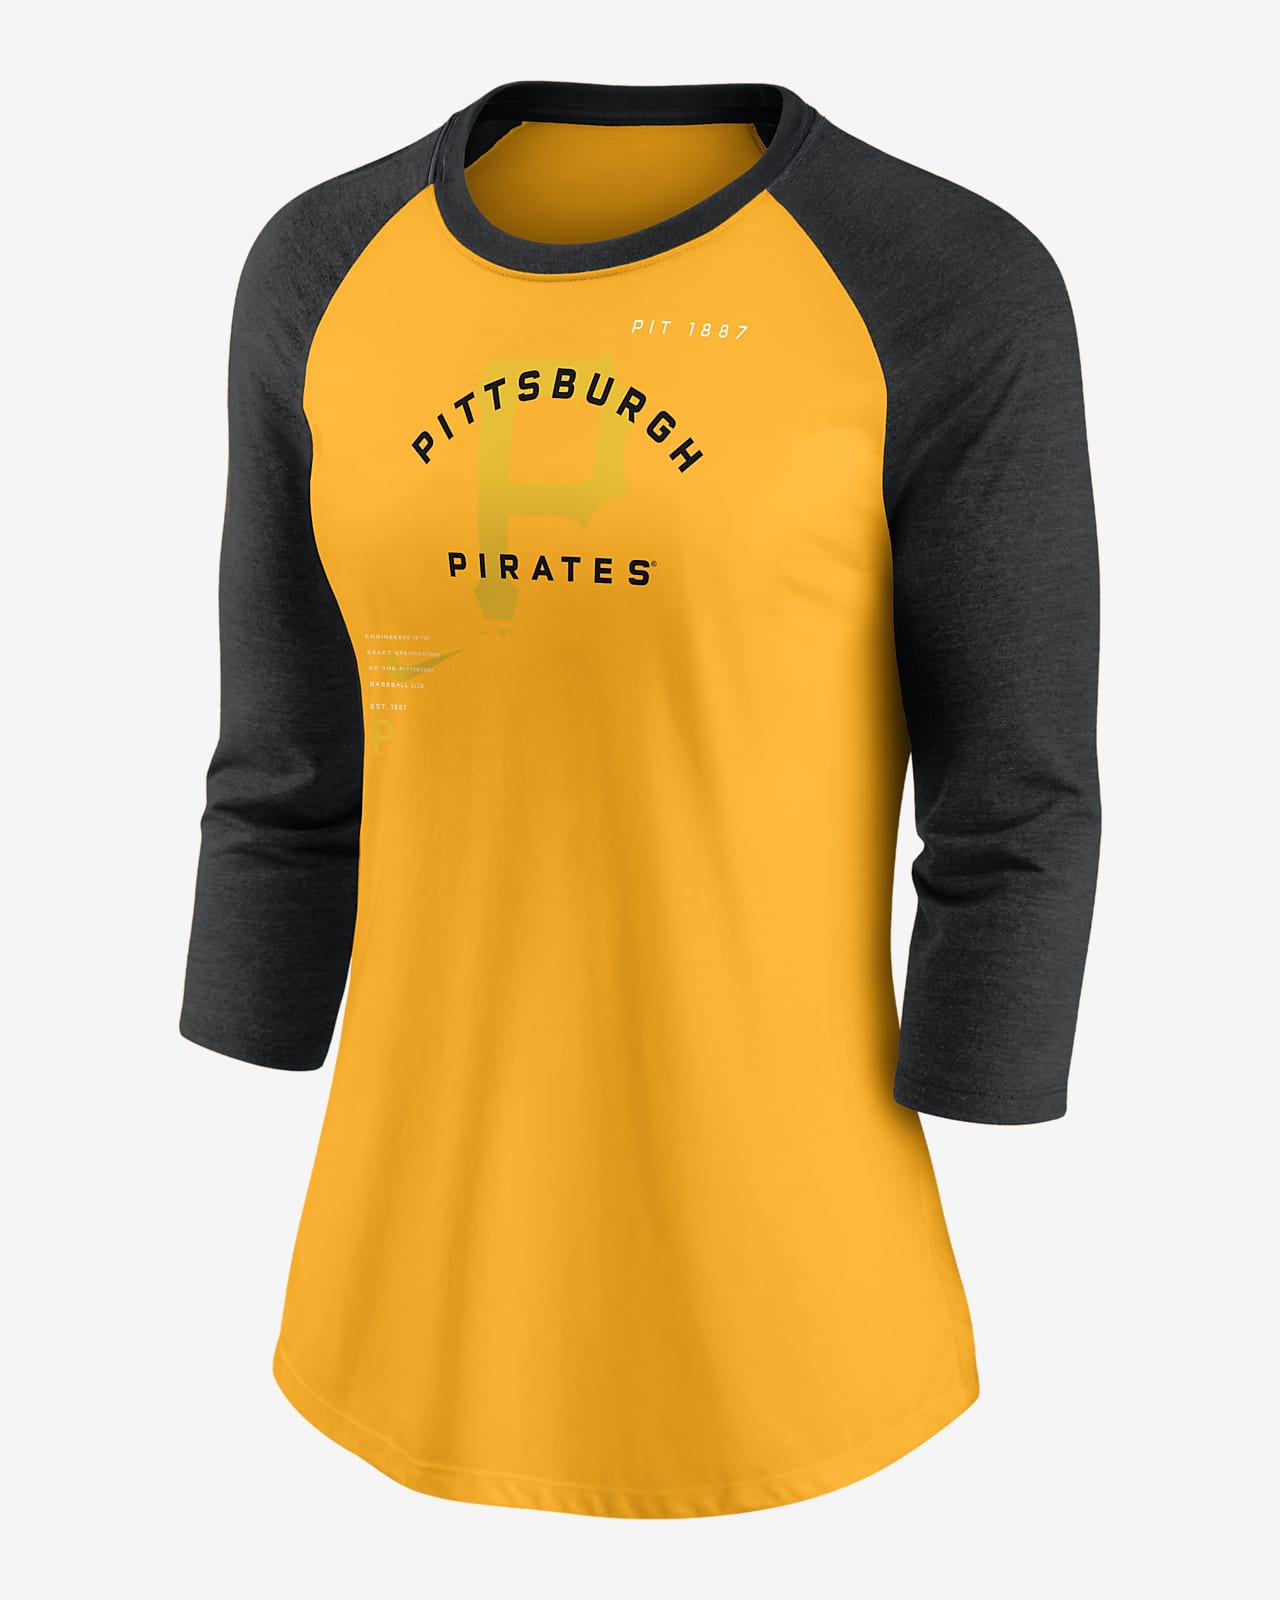 Nike Next Up (MLB Pittsburgh Pirates) Women's 3/4-Sleeve Top.